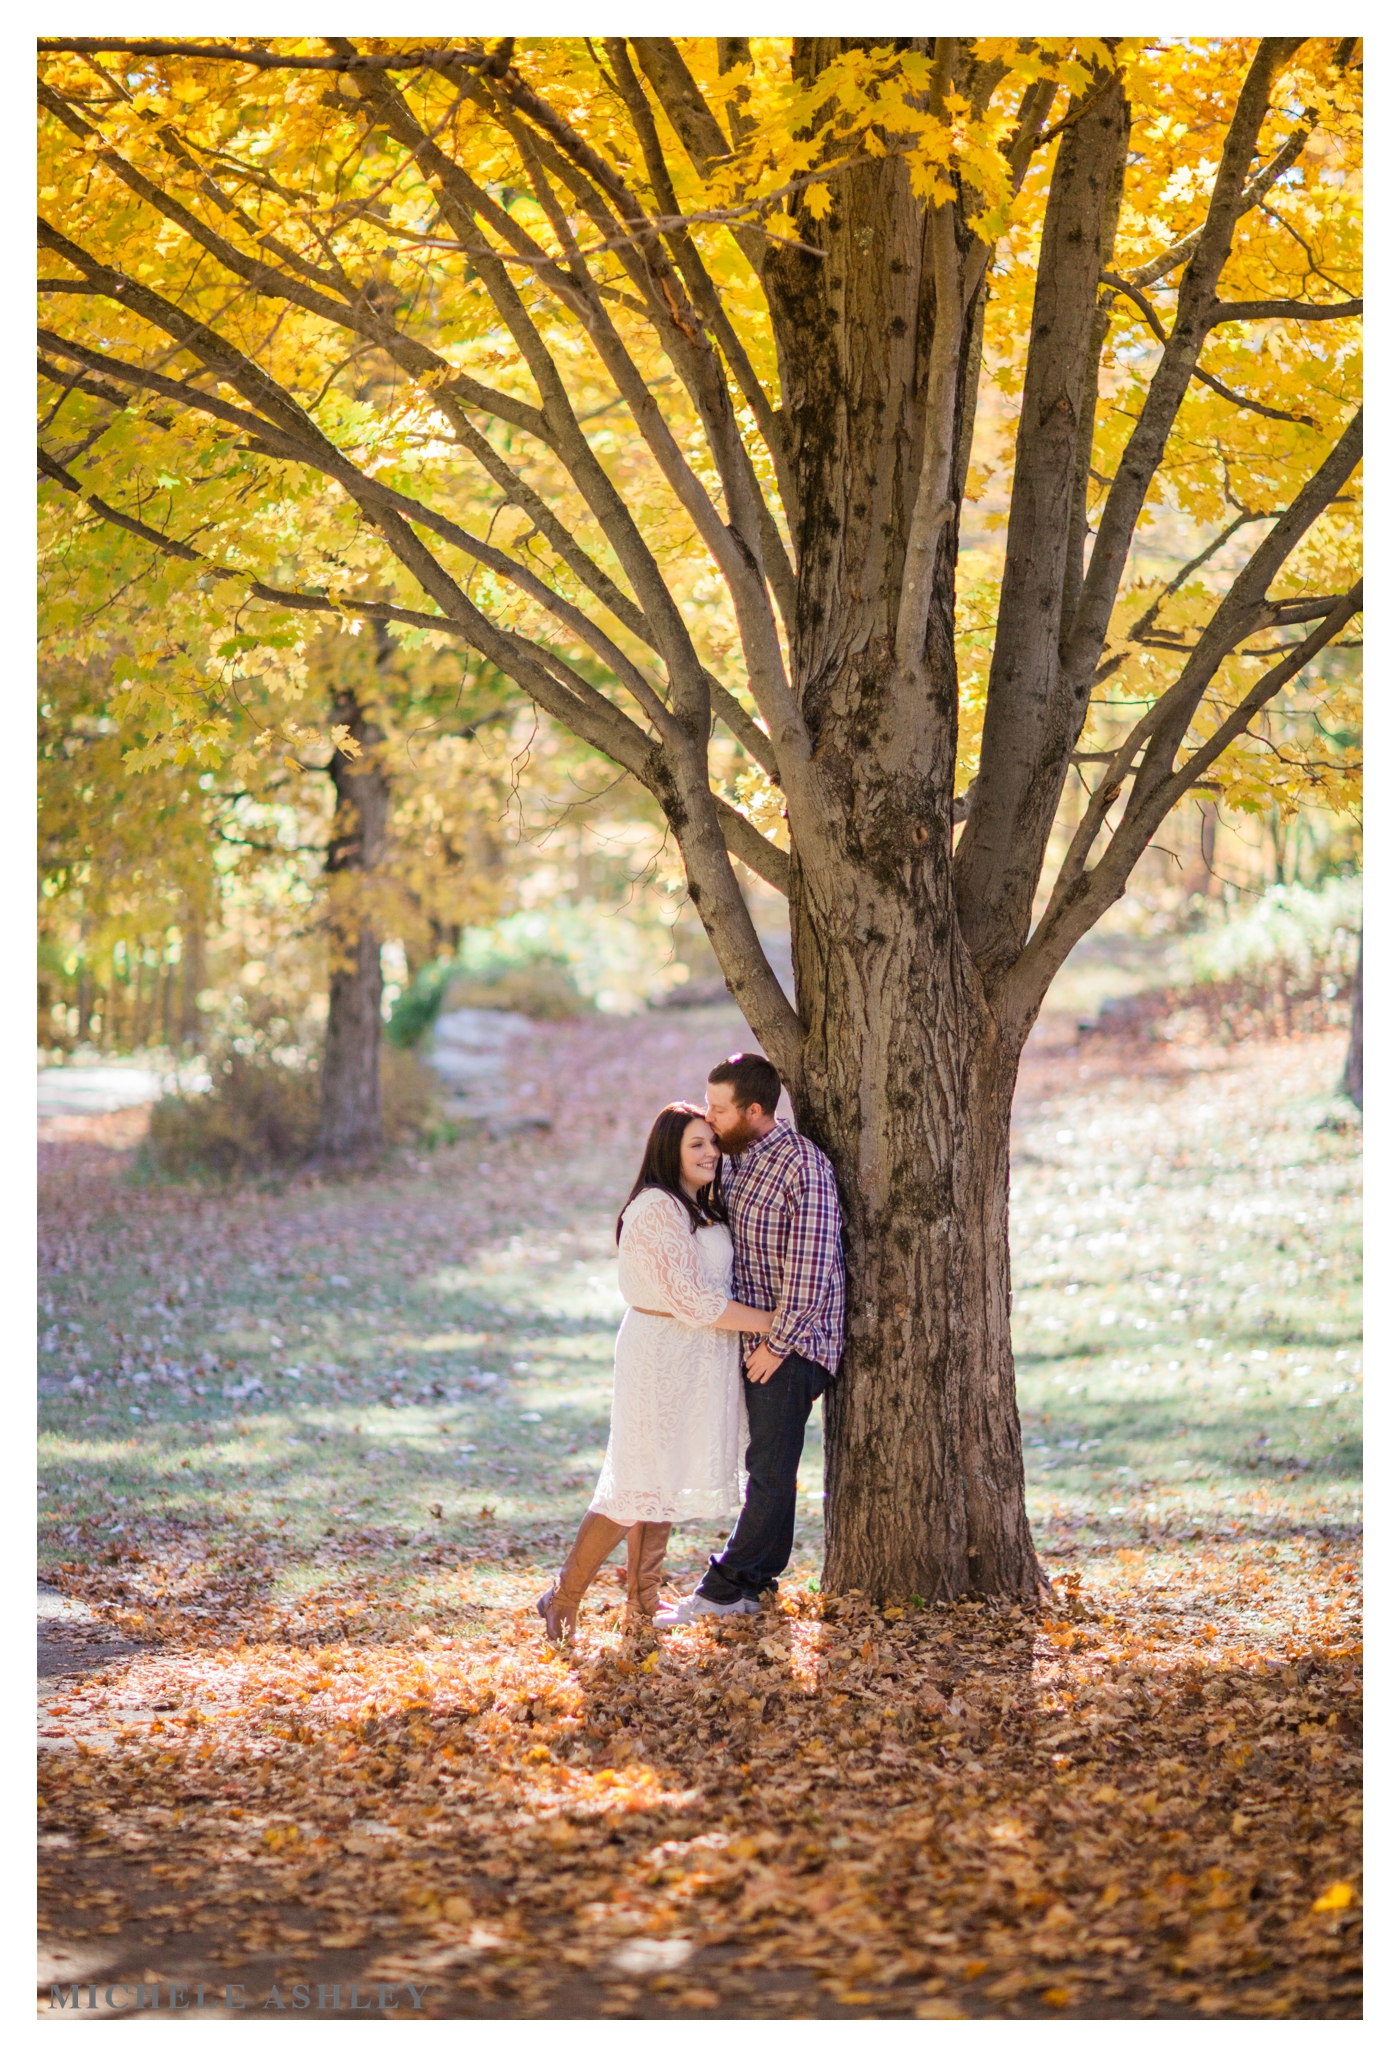 Autumn Engagement | Martin + Brittney | New England | Michele Ashley Photography